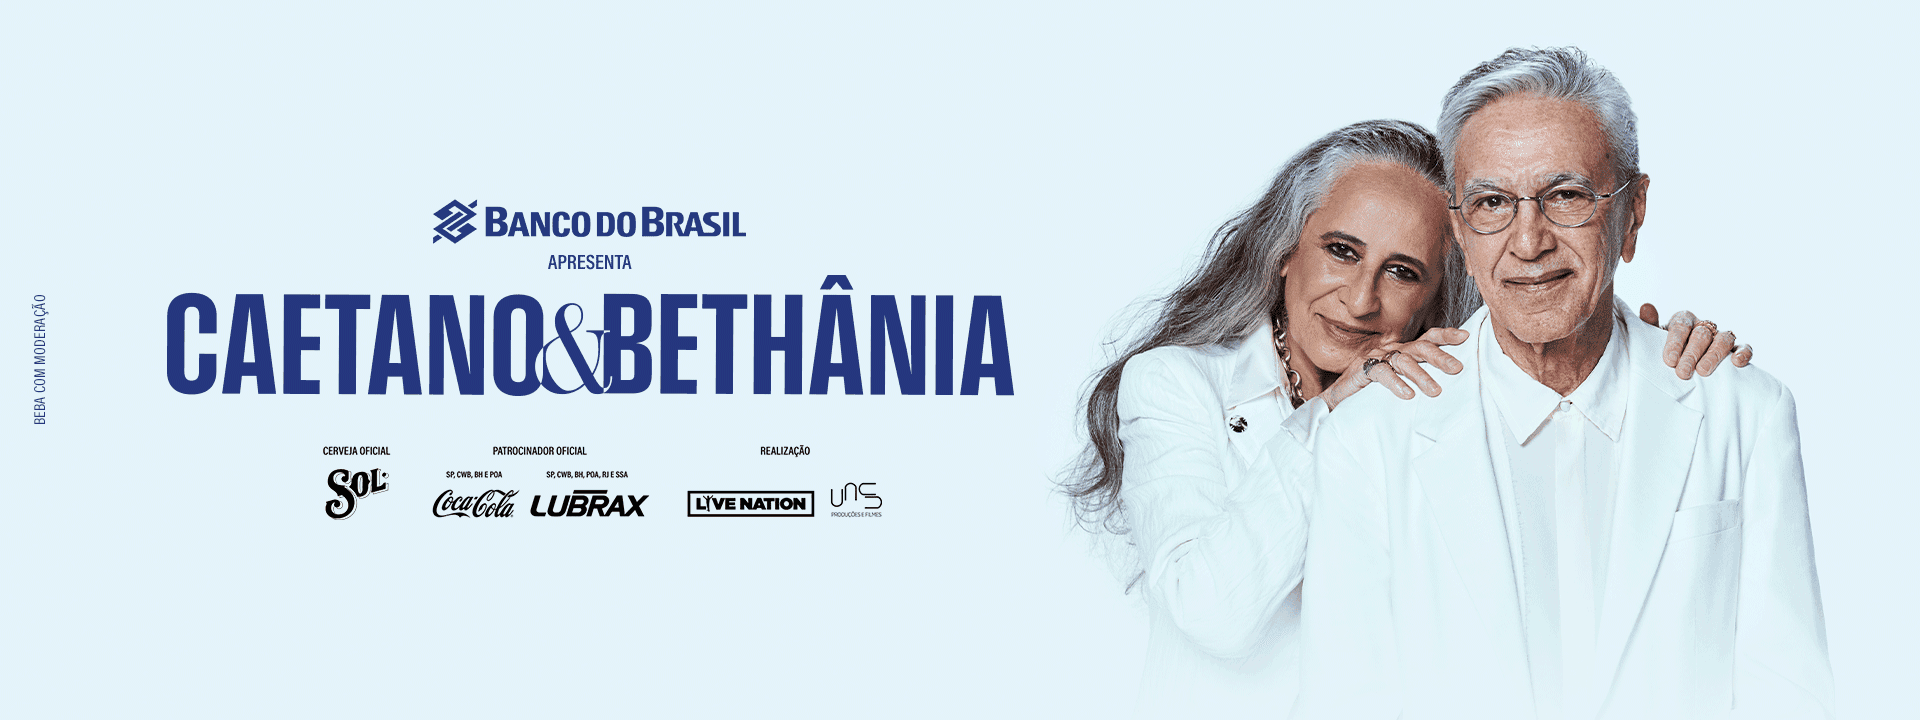 Caetano & Bethânia - Belo Horizonte